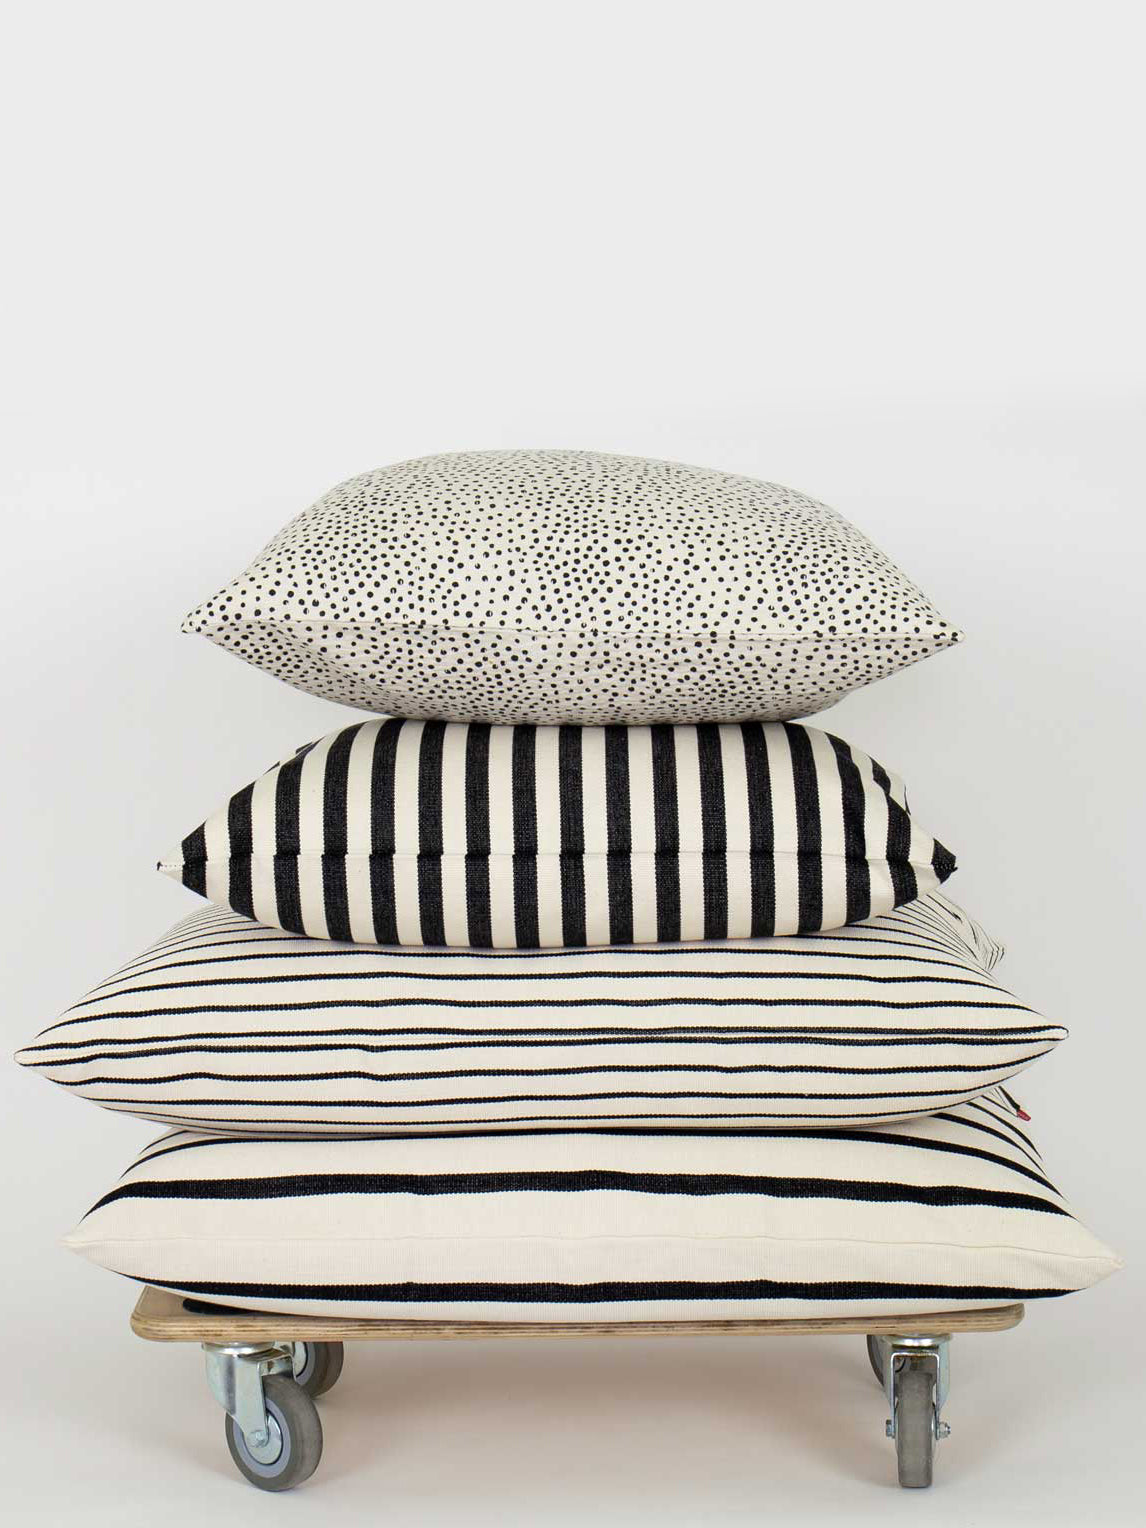 DONIA Cushion (50x50cm), black-white